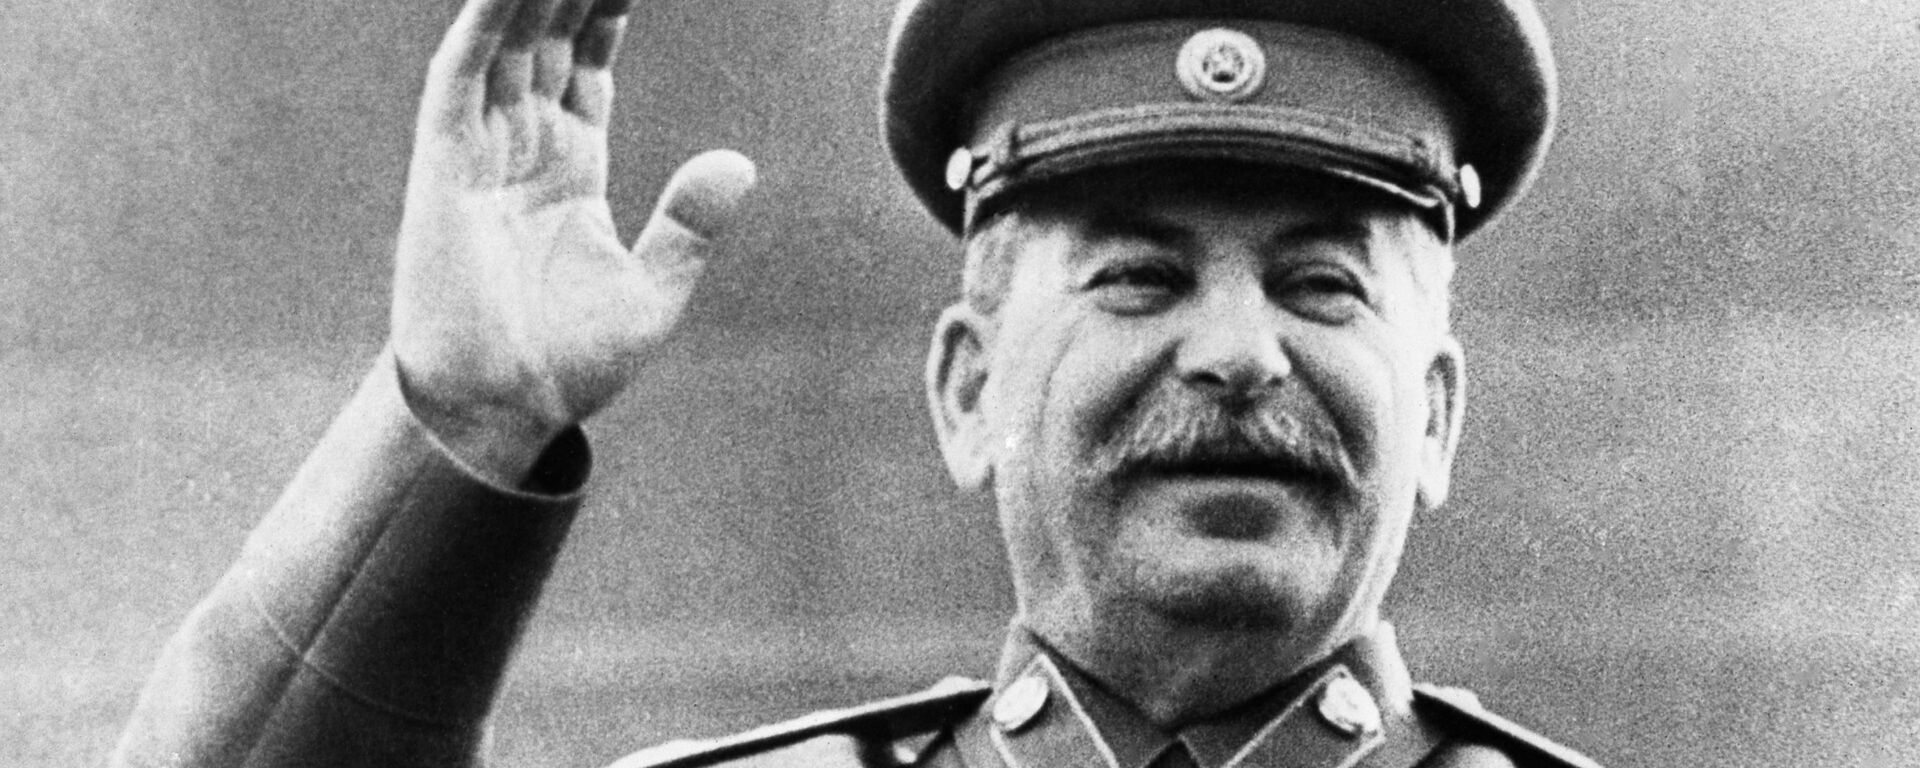 Josef Stalin - Sputnik Brasil, 1920, 08.07.2019